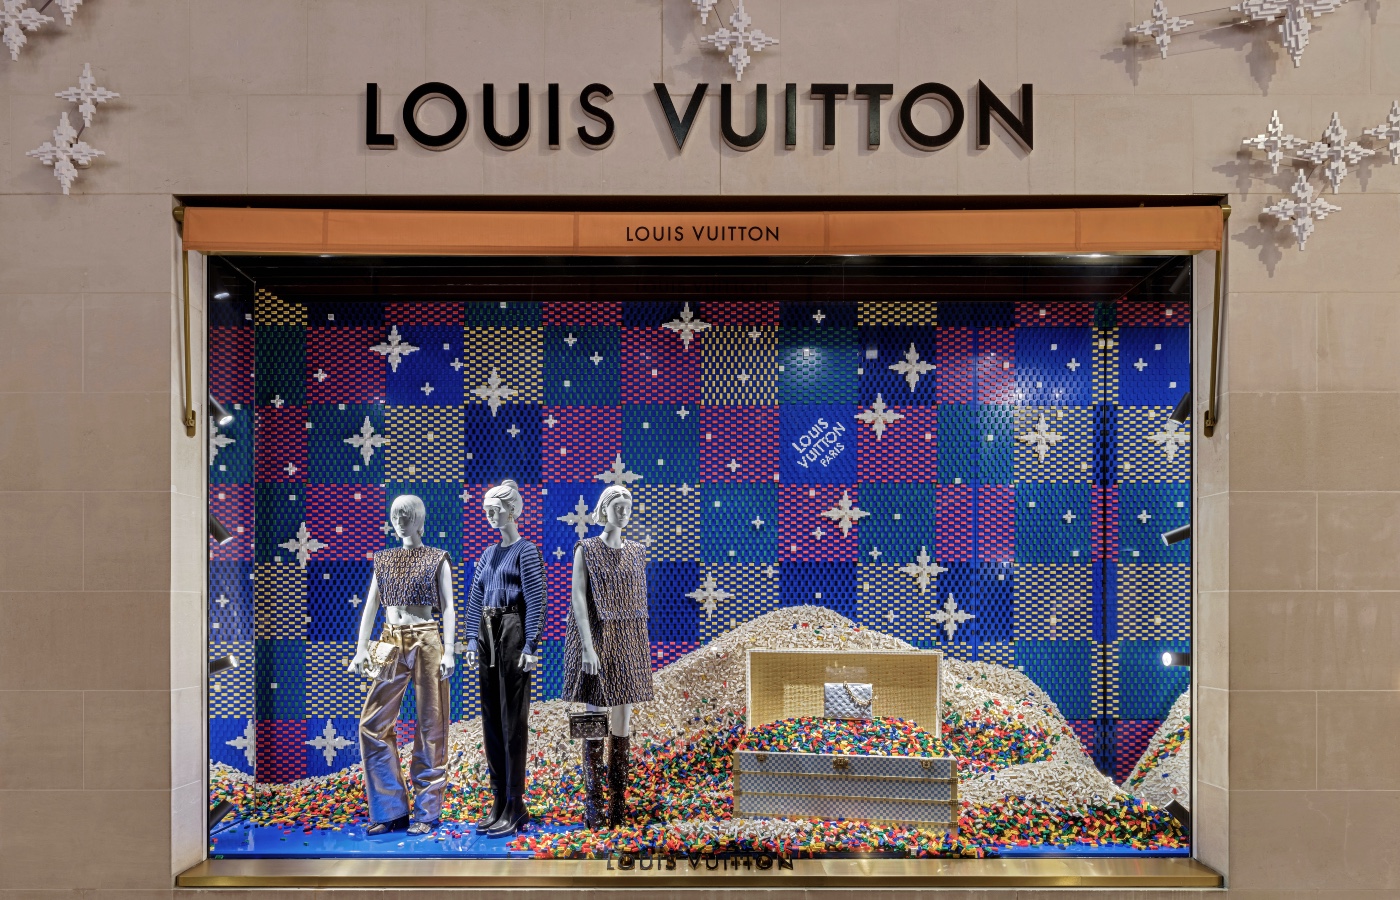 Louis Vuitton recreates city of Paris with LEGO bricks